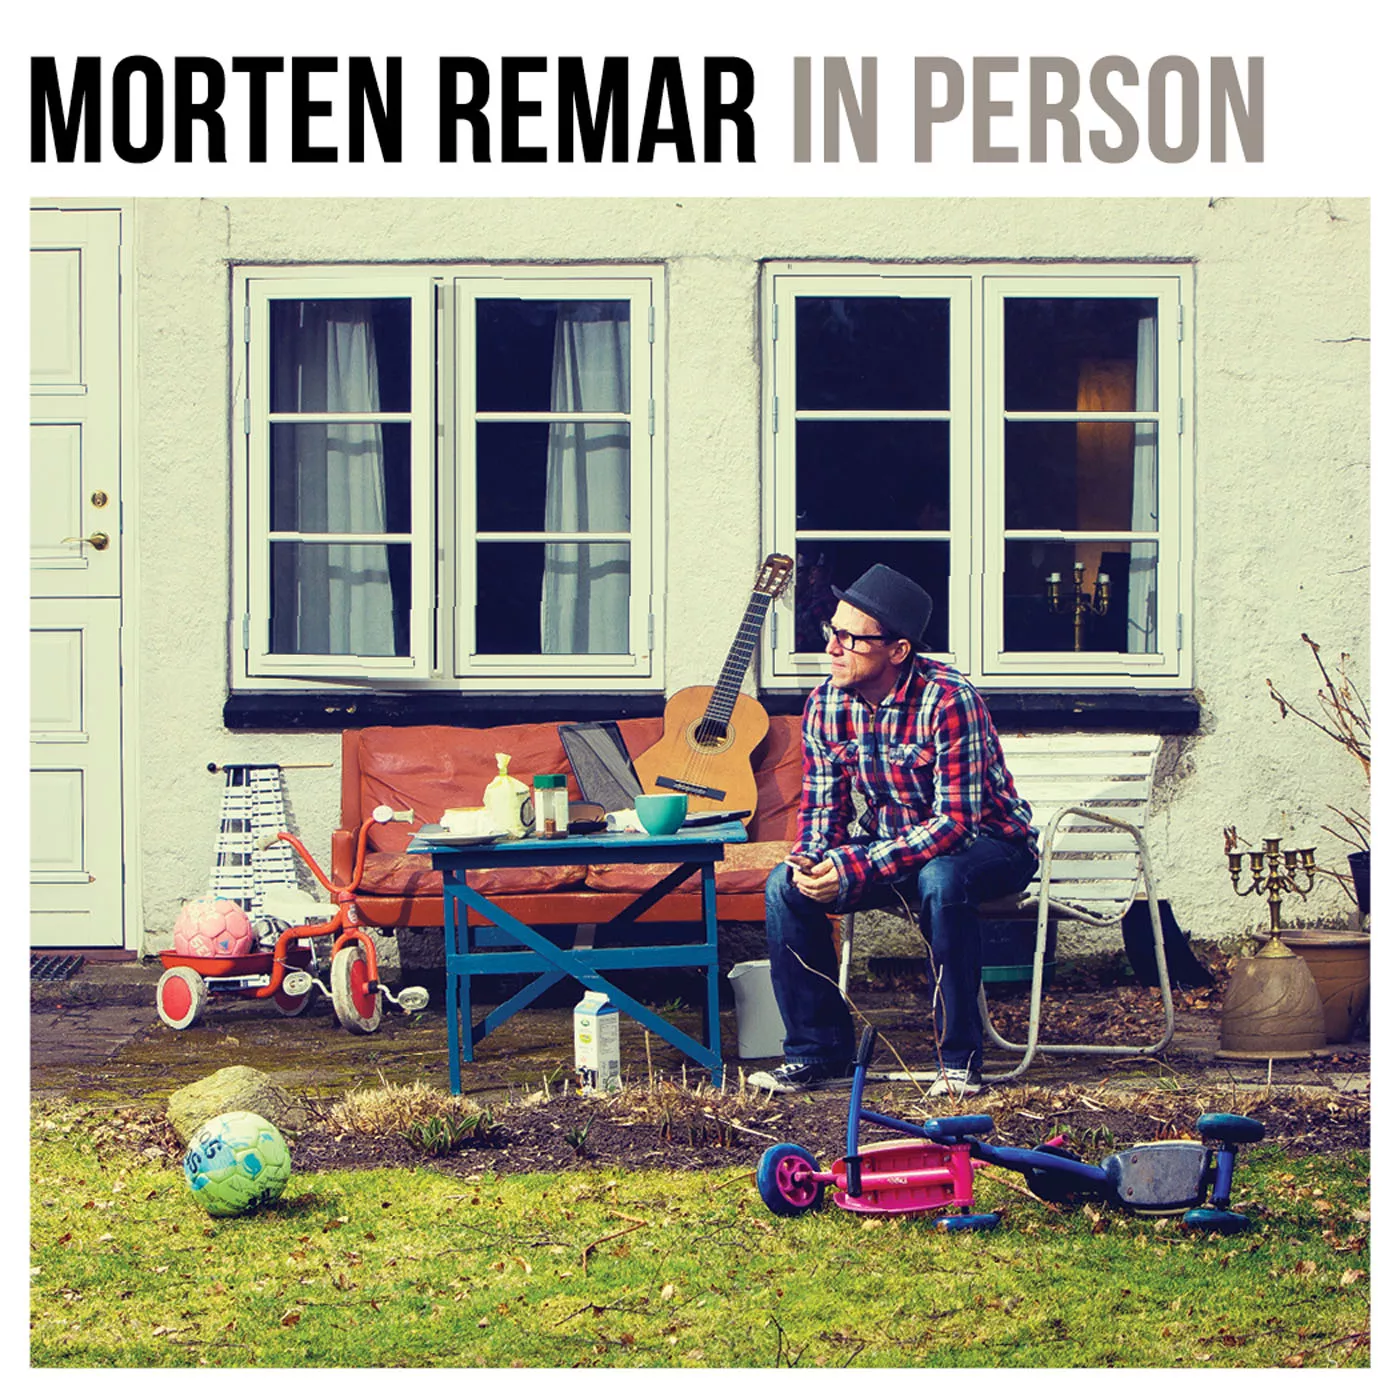 Morten Remar gennemgår sit nye album